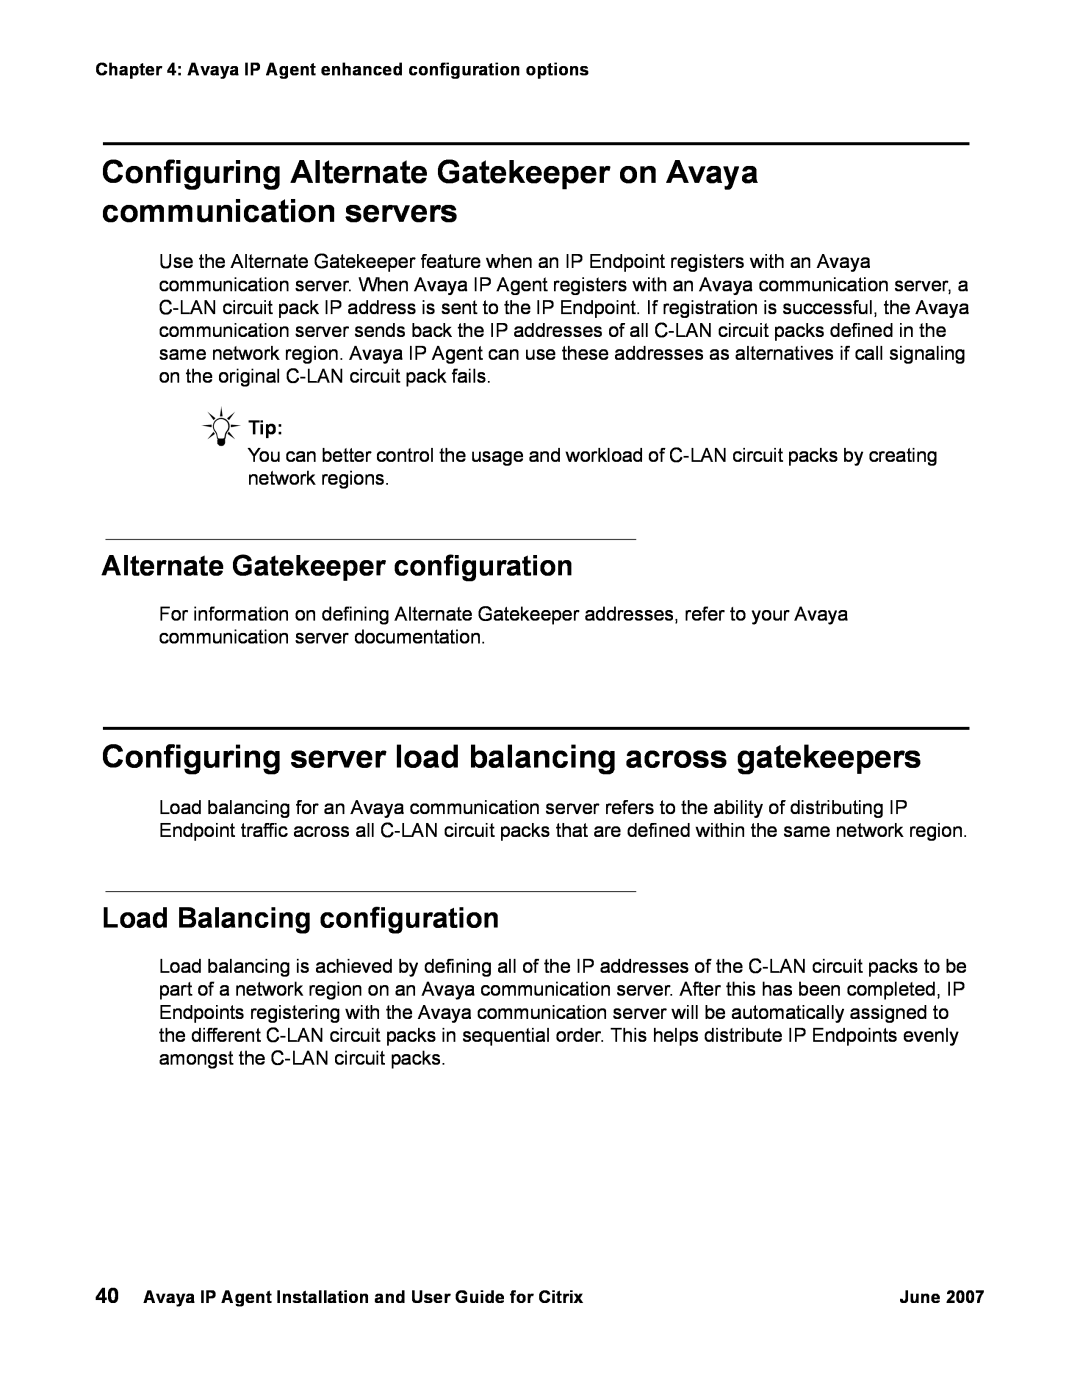 Avaya 7 manual Configuring Alternate Gatekeeper on Avaya communication servers, Alternate Gatekeeper configuration 